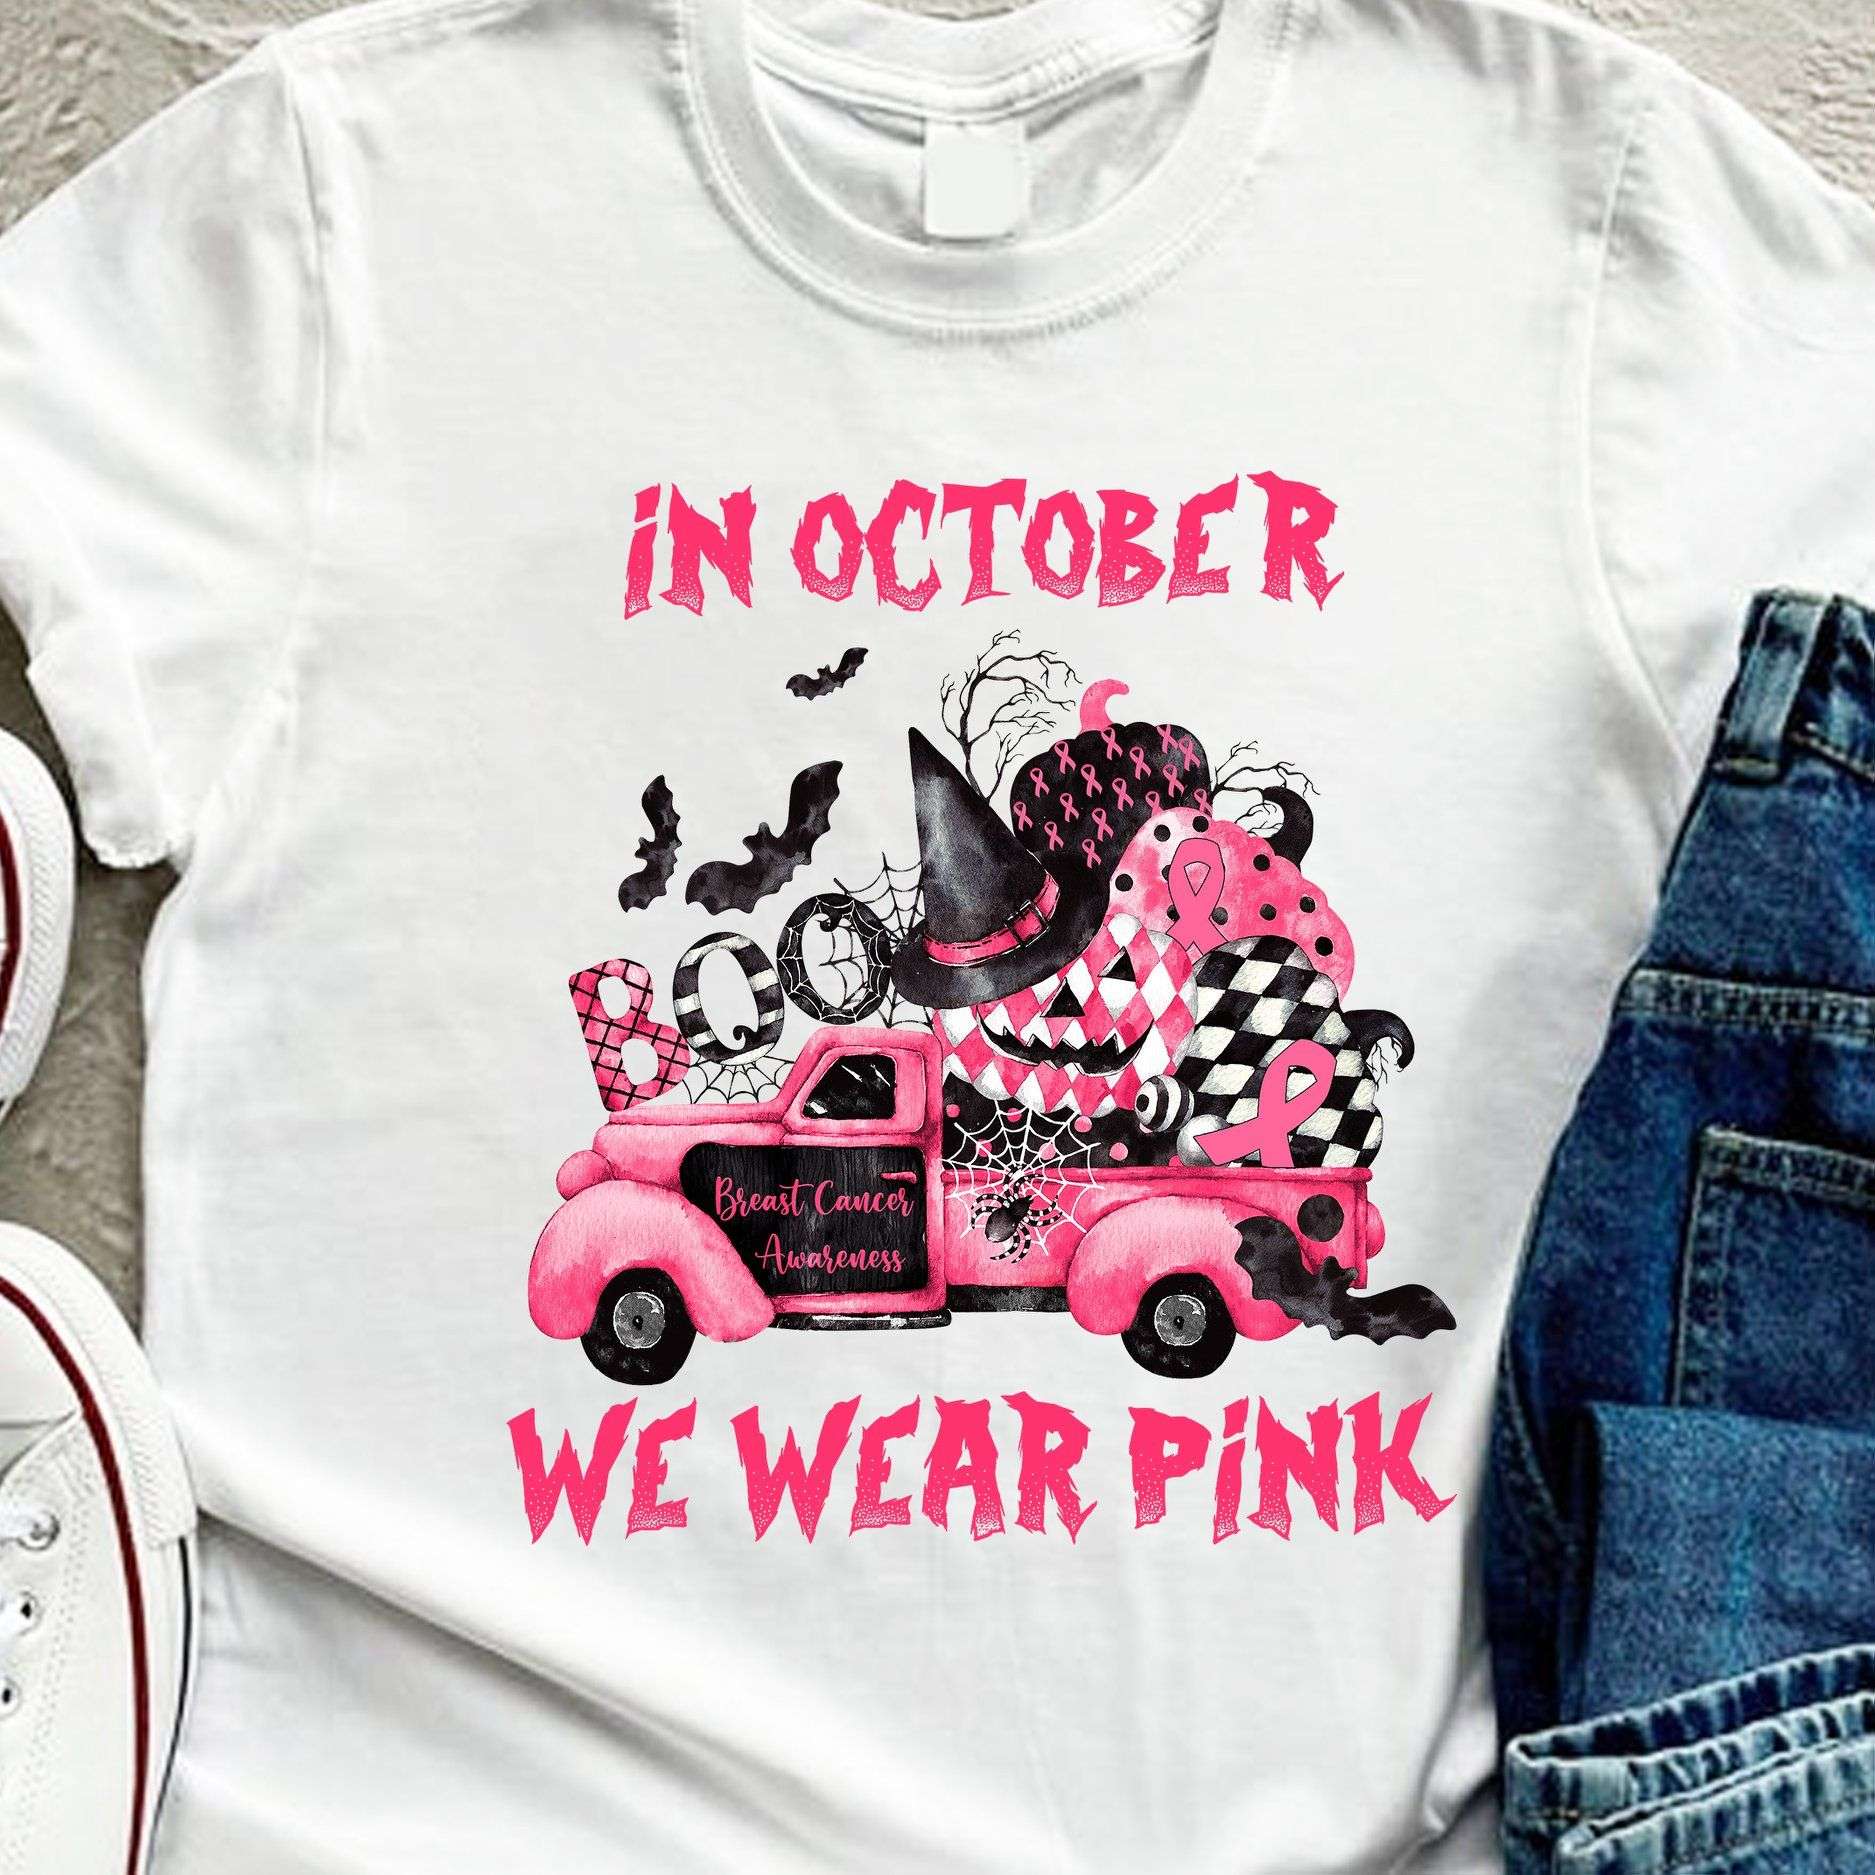 In October we wear pink - Breast cancer awareness, Pink pumpkin, Halloween boo costume